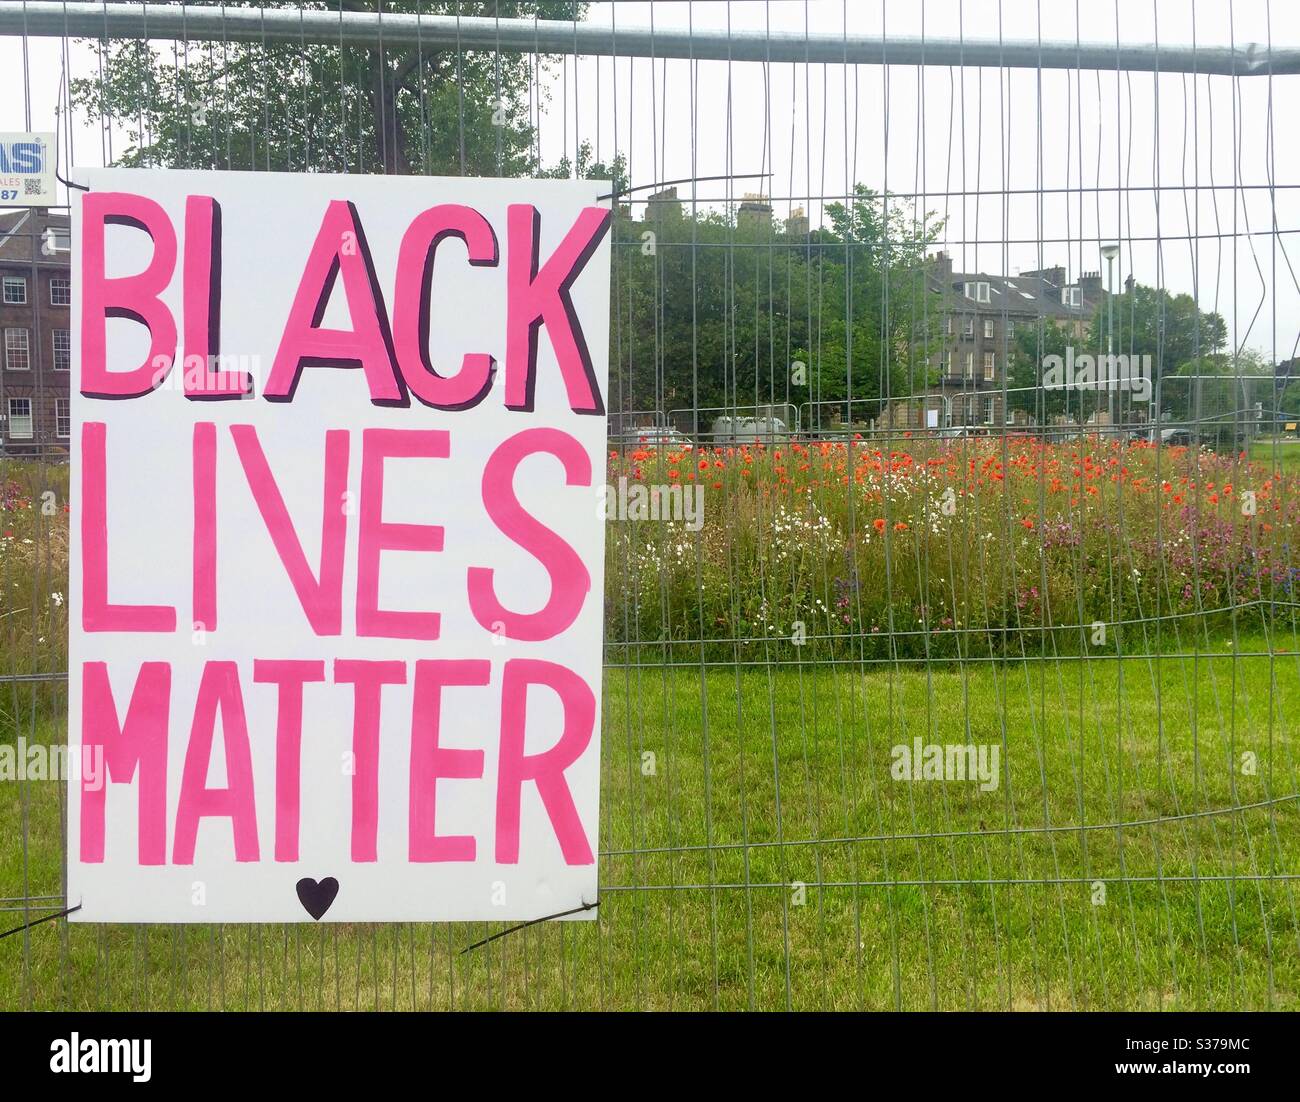 Black lives matter sign in park Stock Photo